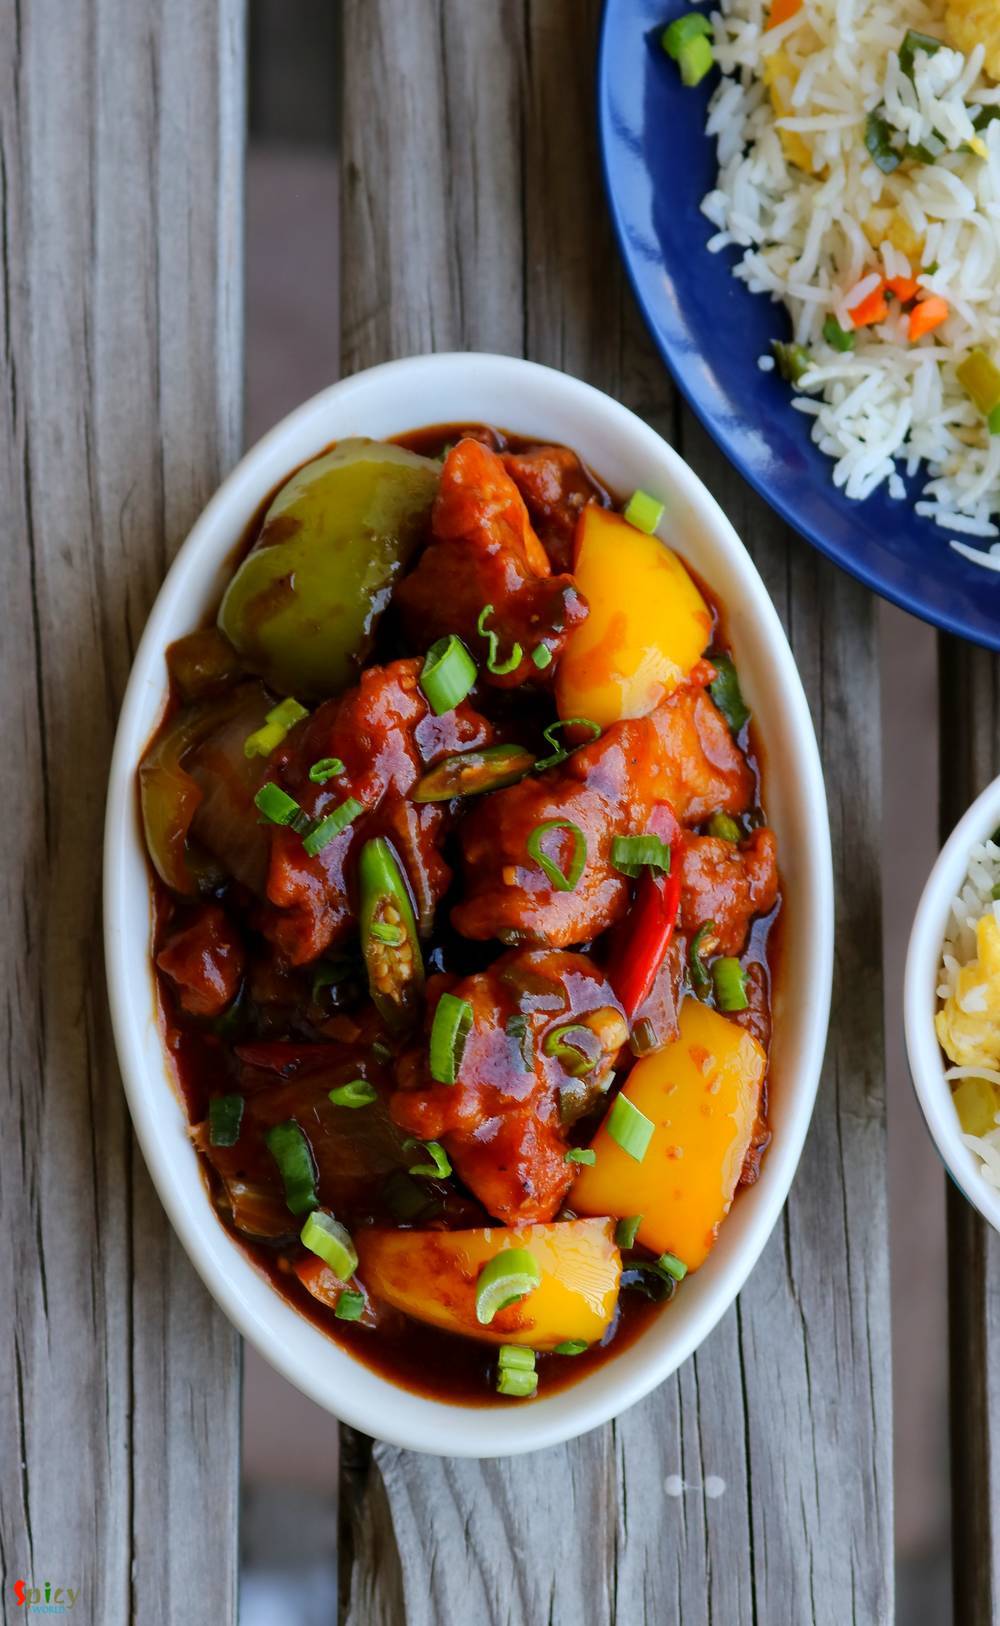 Kolkata style Chili Fish - Spicy World Simple and Easy Recipes by Arpita